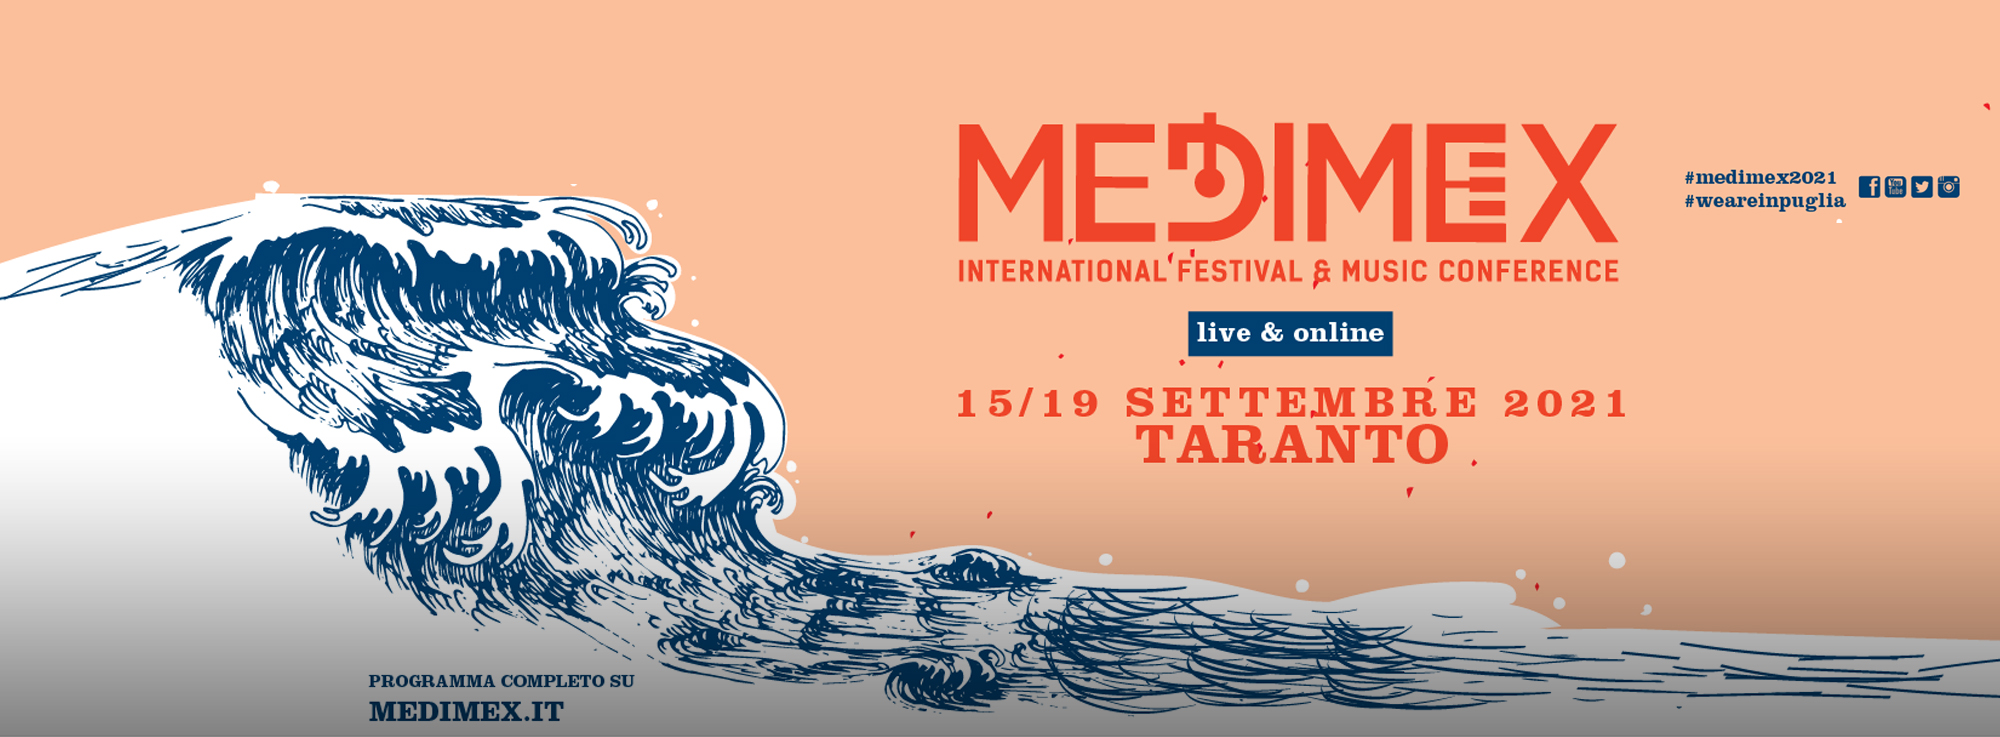 Taranto: Medimex